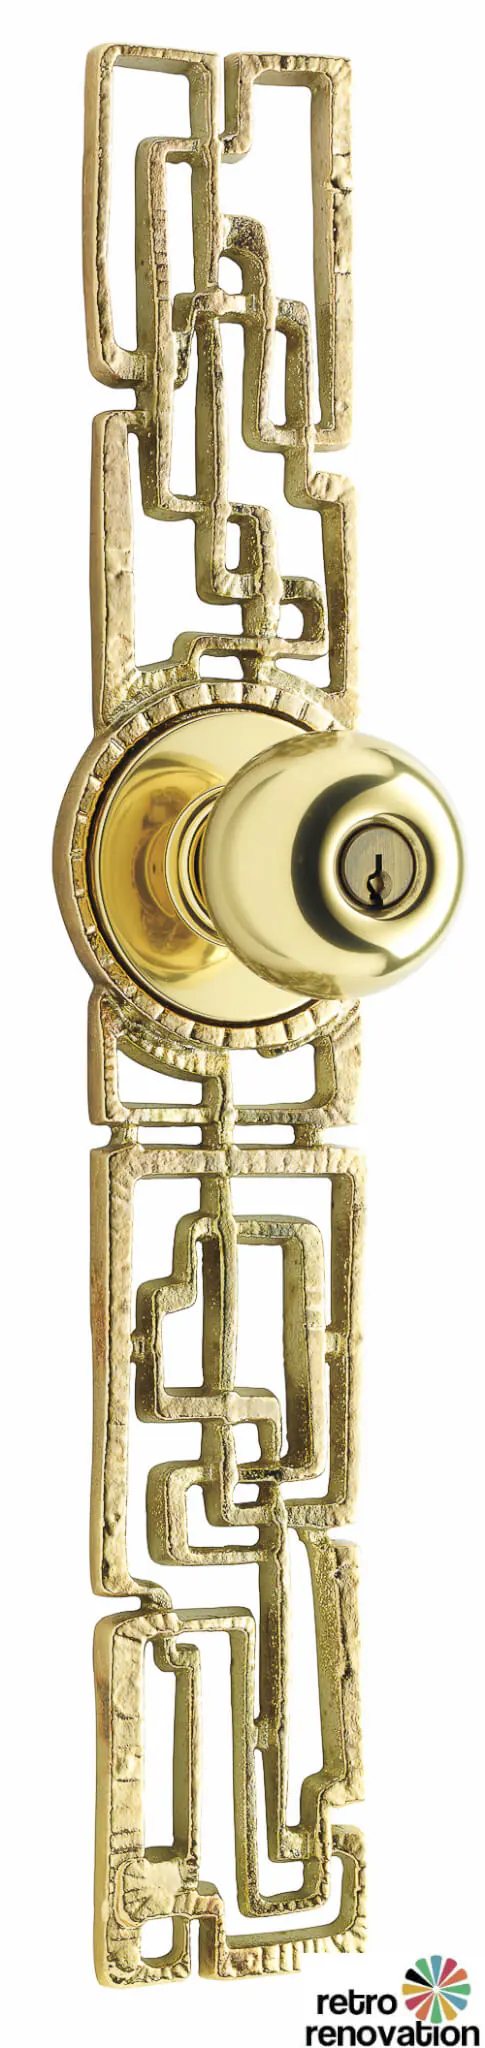 midcentury modern doorset escutcheon, samba by rejuvenation